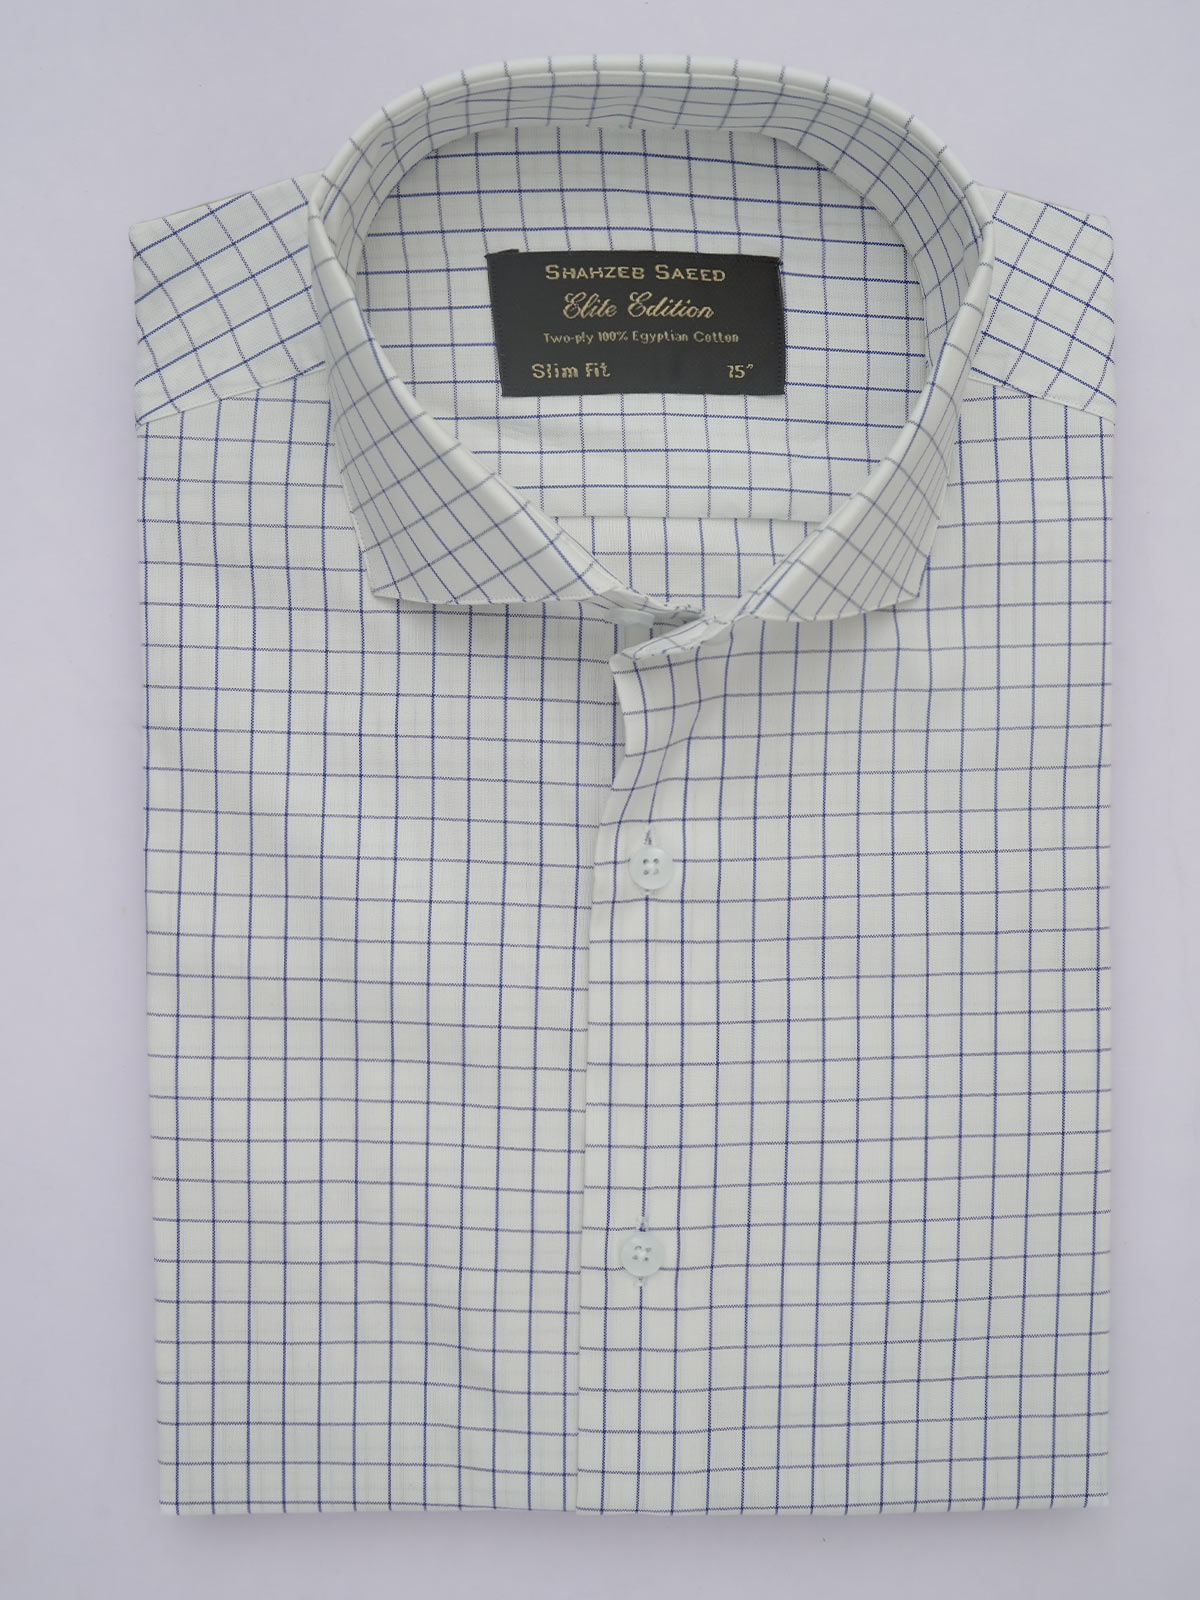 White & Blue Checkered, Elite Edition, Cutaway Collar Men’s Formal Shirt (FS-547)